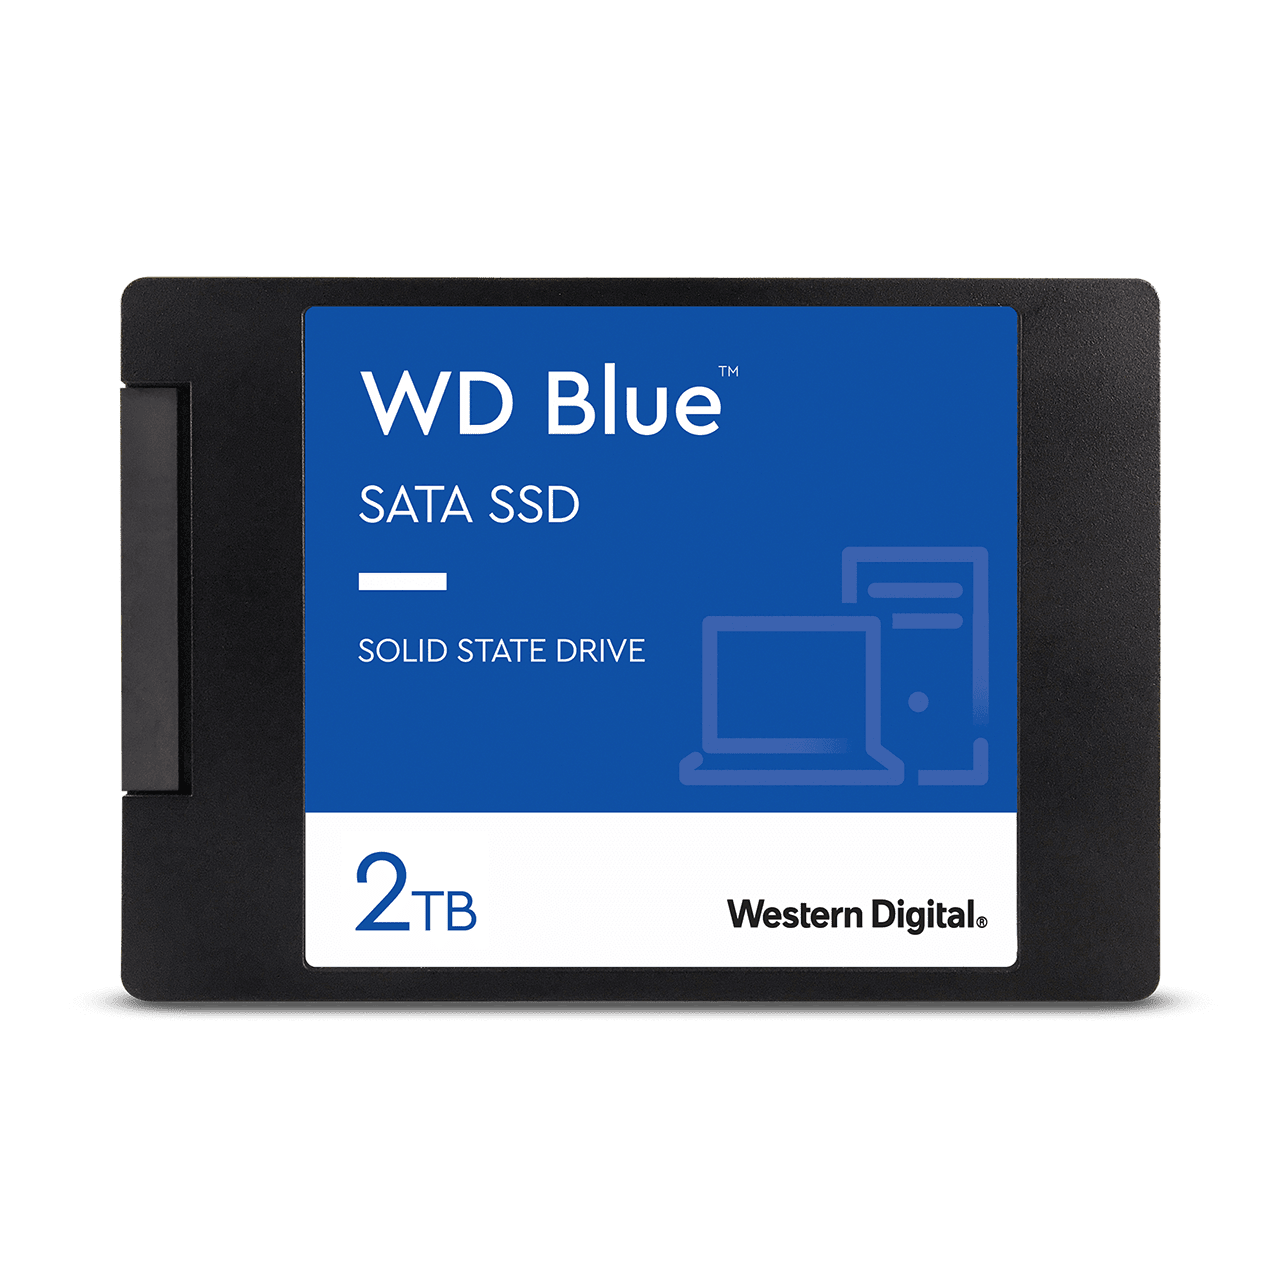 WD Blue™ SATA SSD - 2TB - Image2